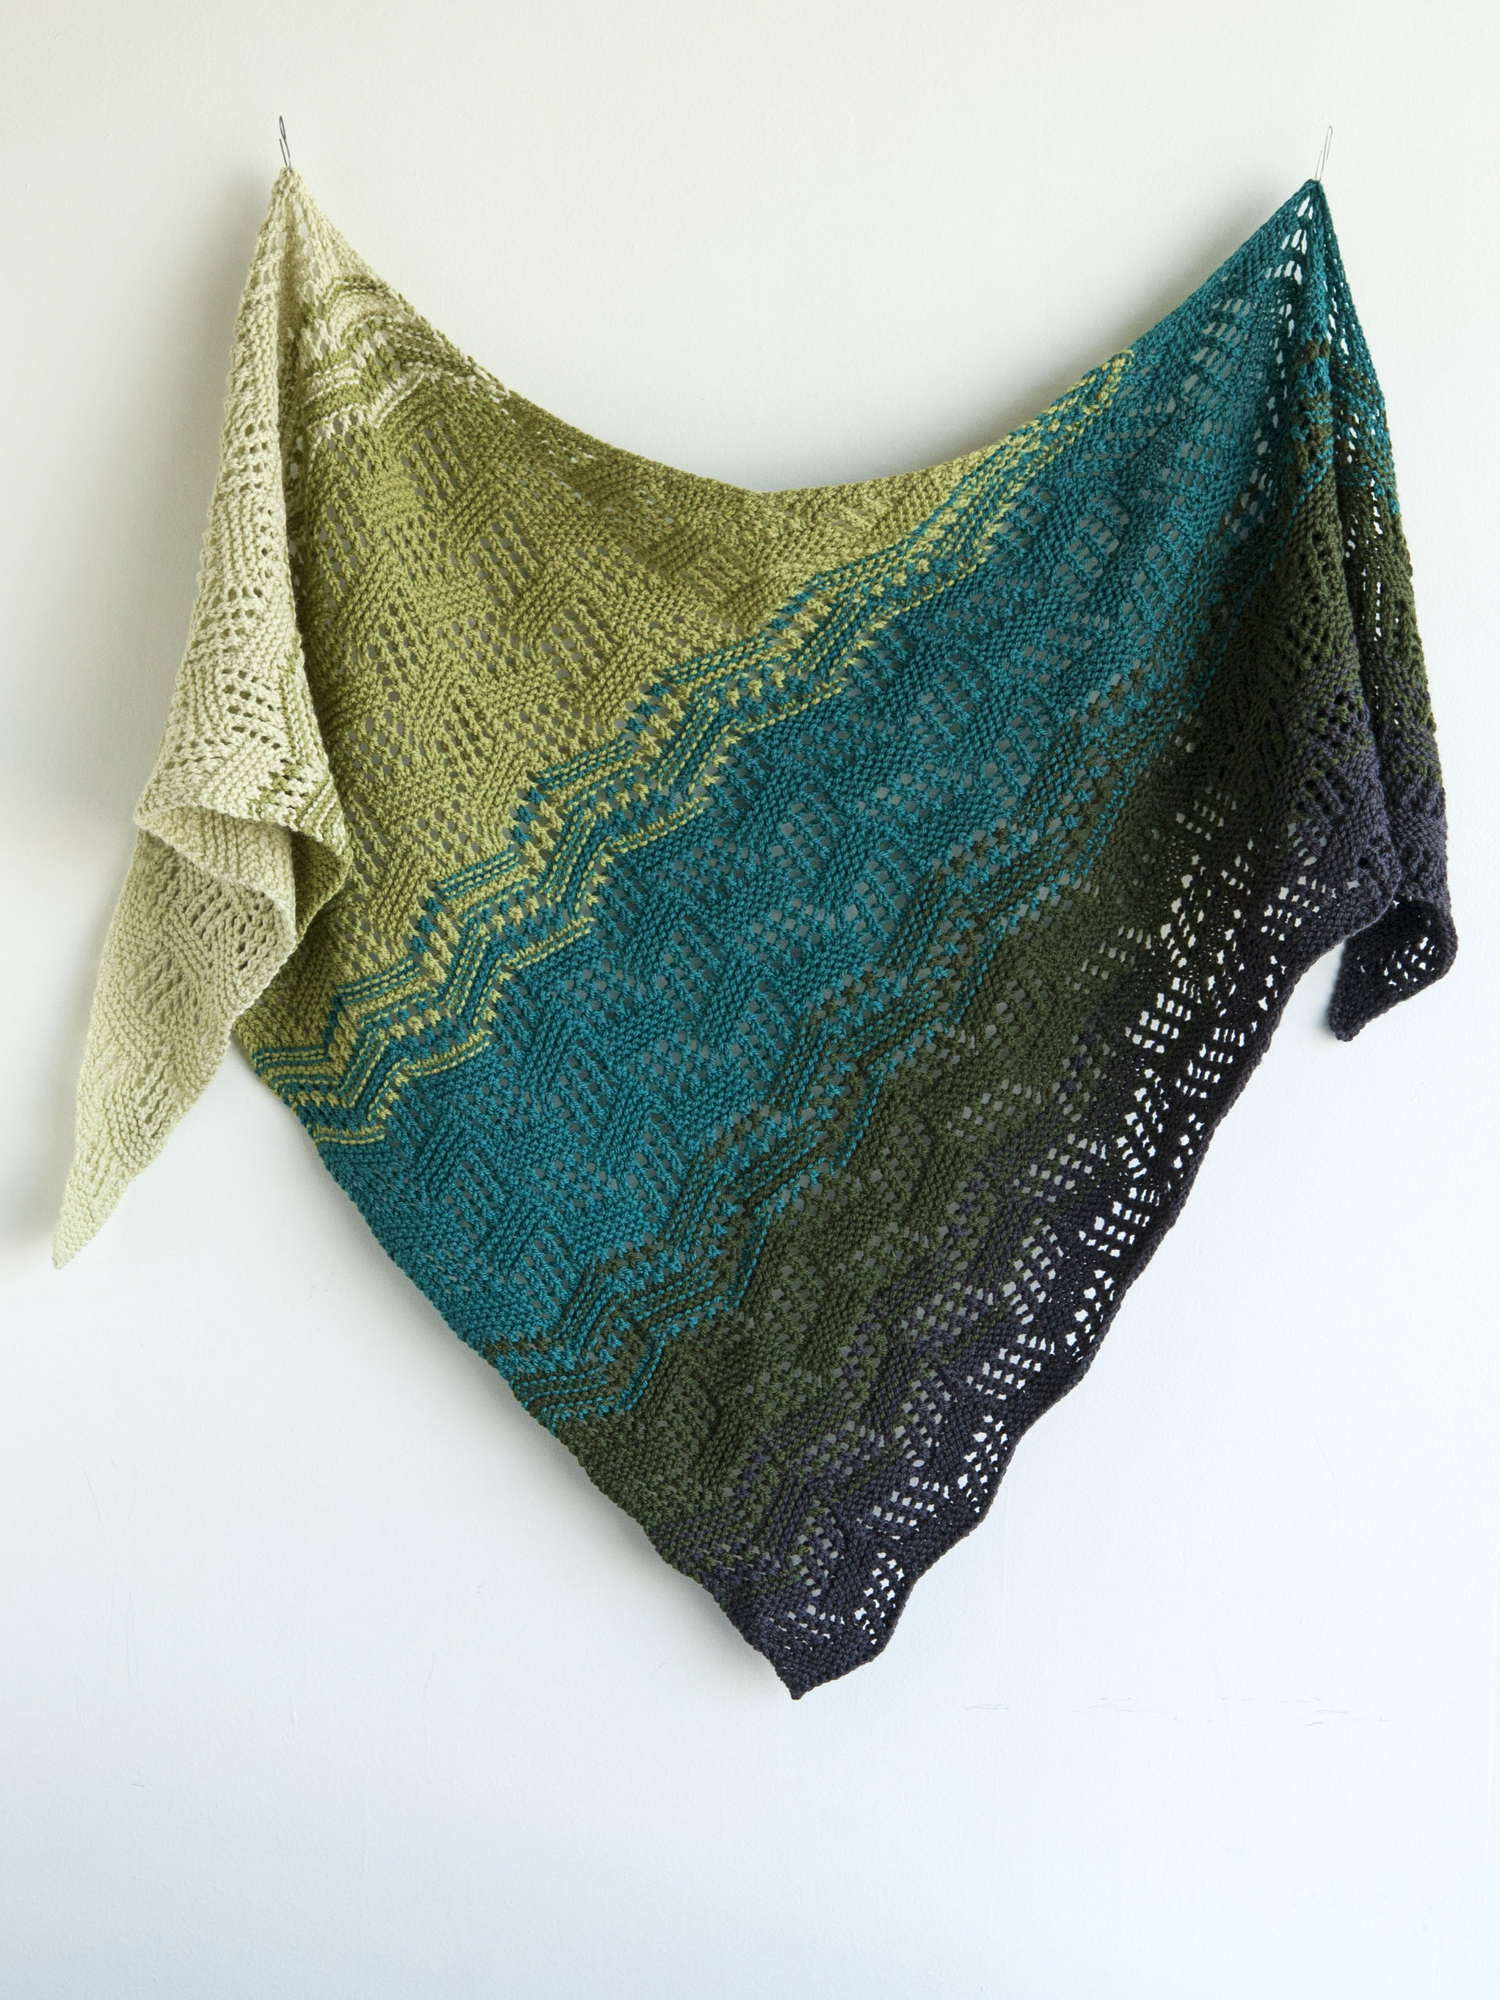 Shawls Wraps Knitting And Crochet Patterns Ewe Ewe Yarns